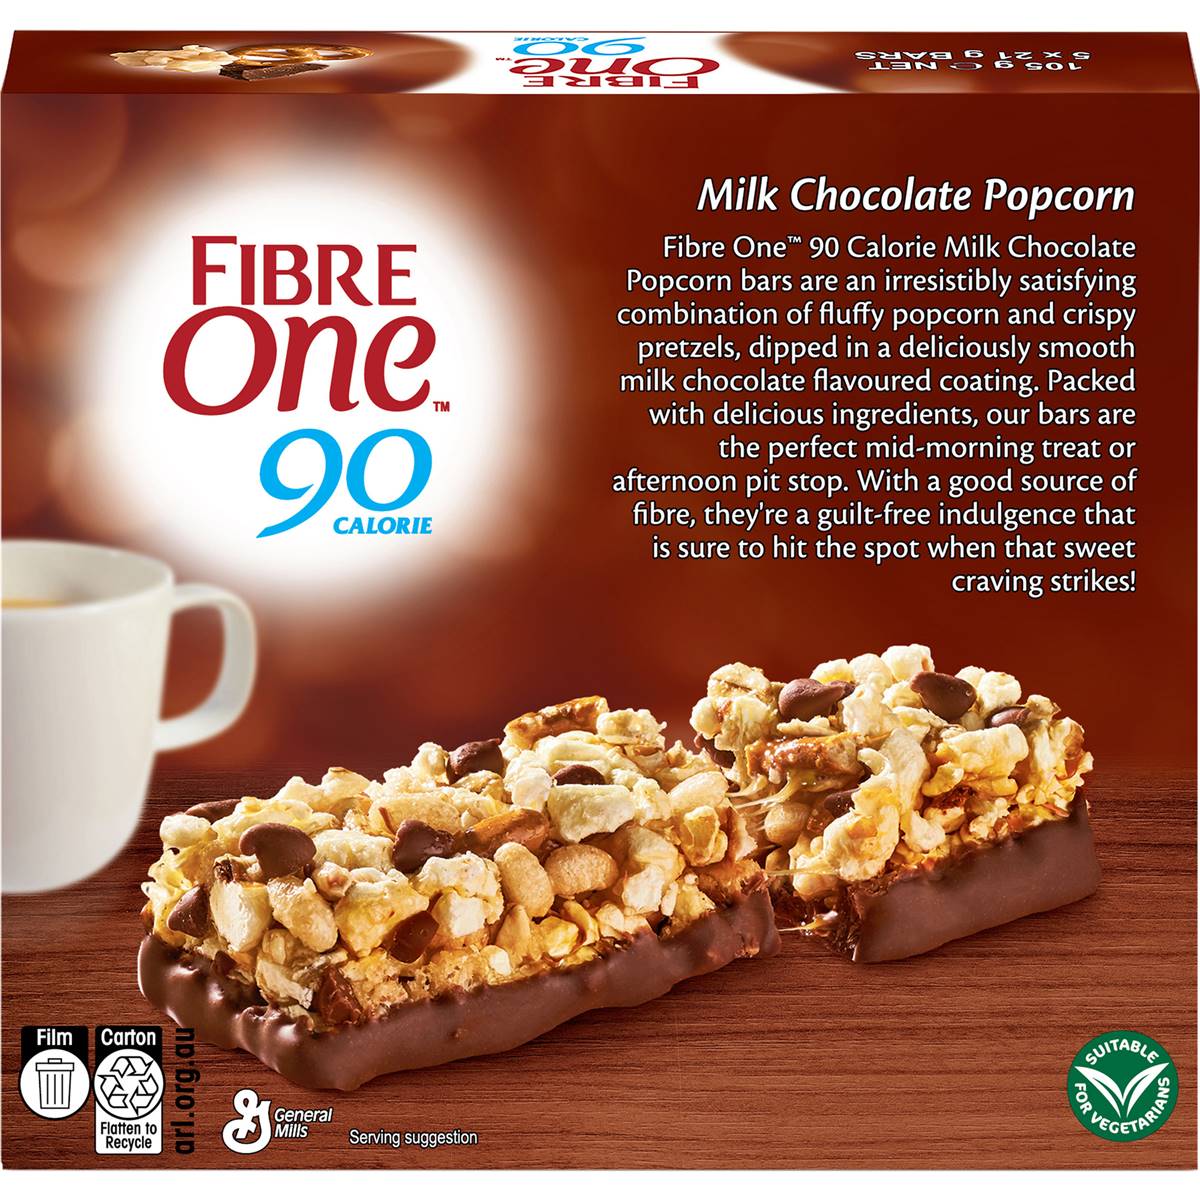 Fibre One Milk Chocolate Popcorn Bars 105g